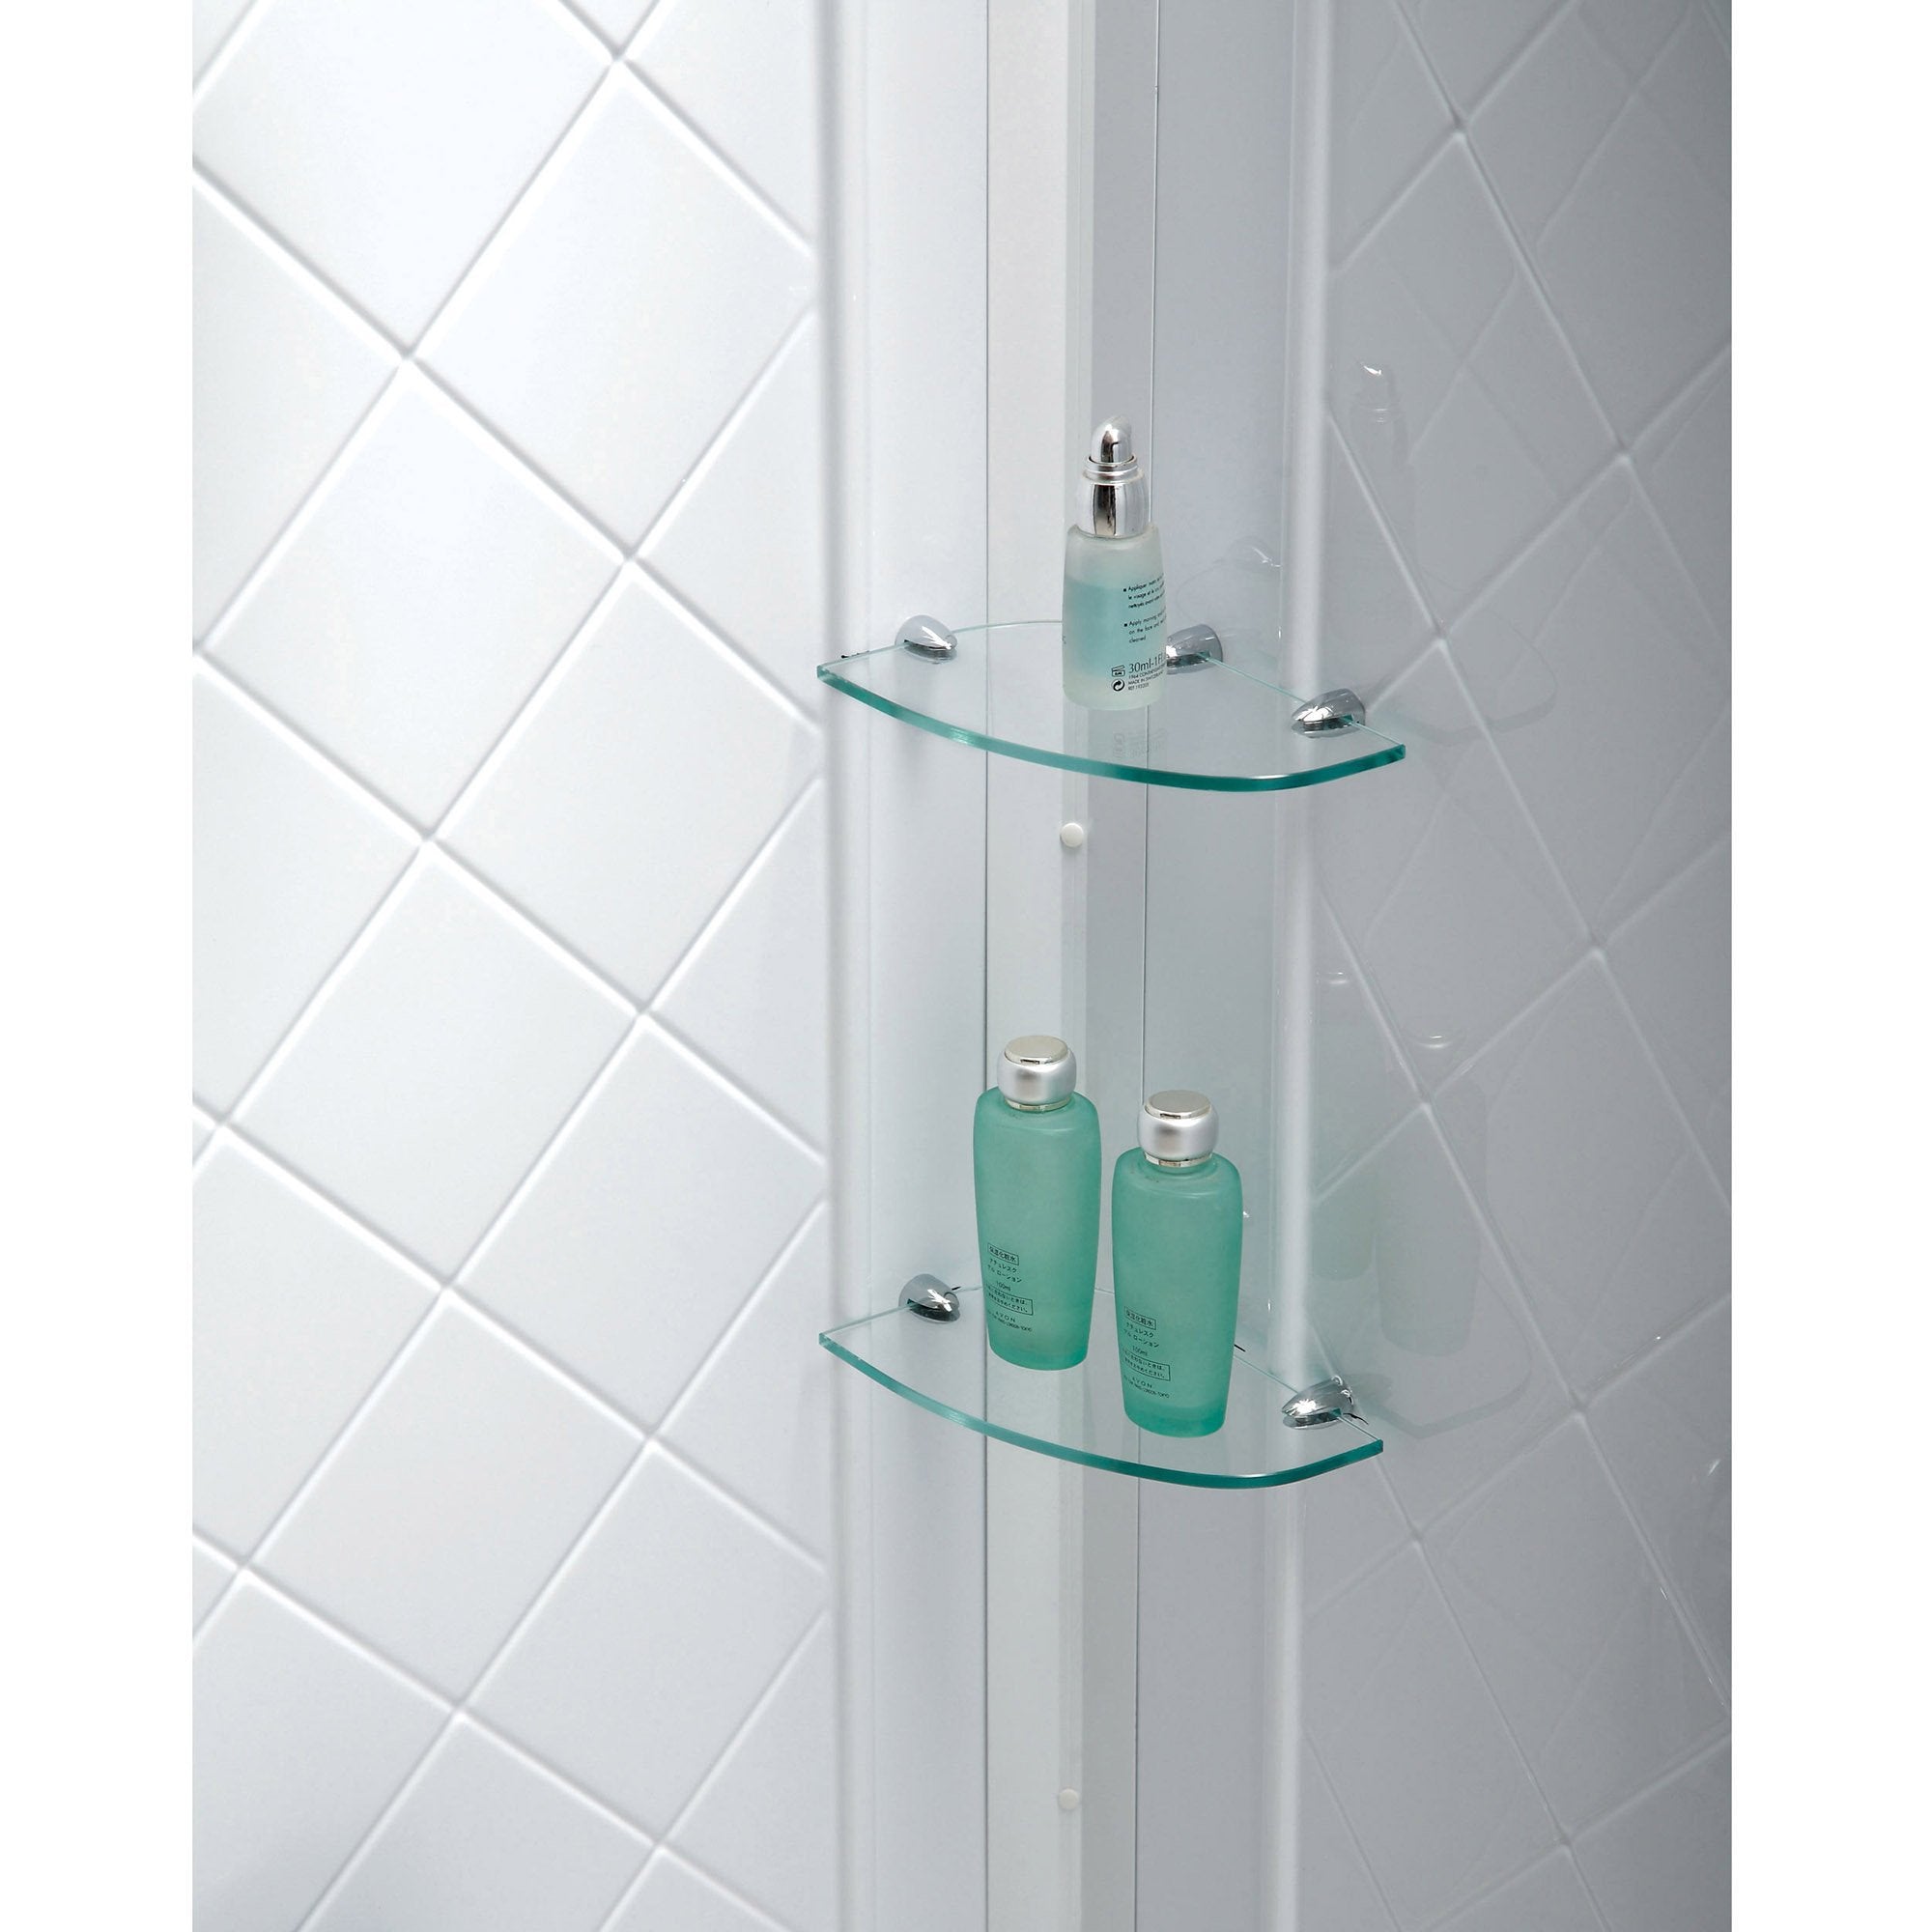  Corner Shower Caddy, Bathroom Shower Shelfs, Acrylic